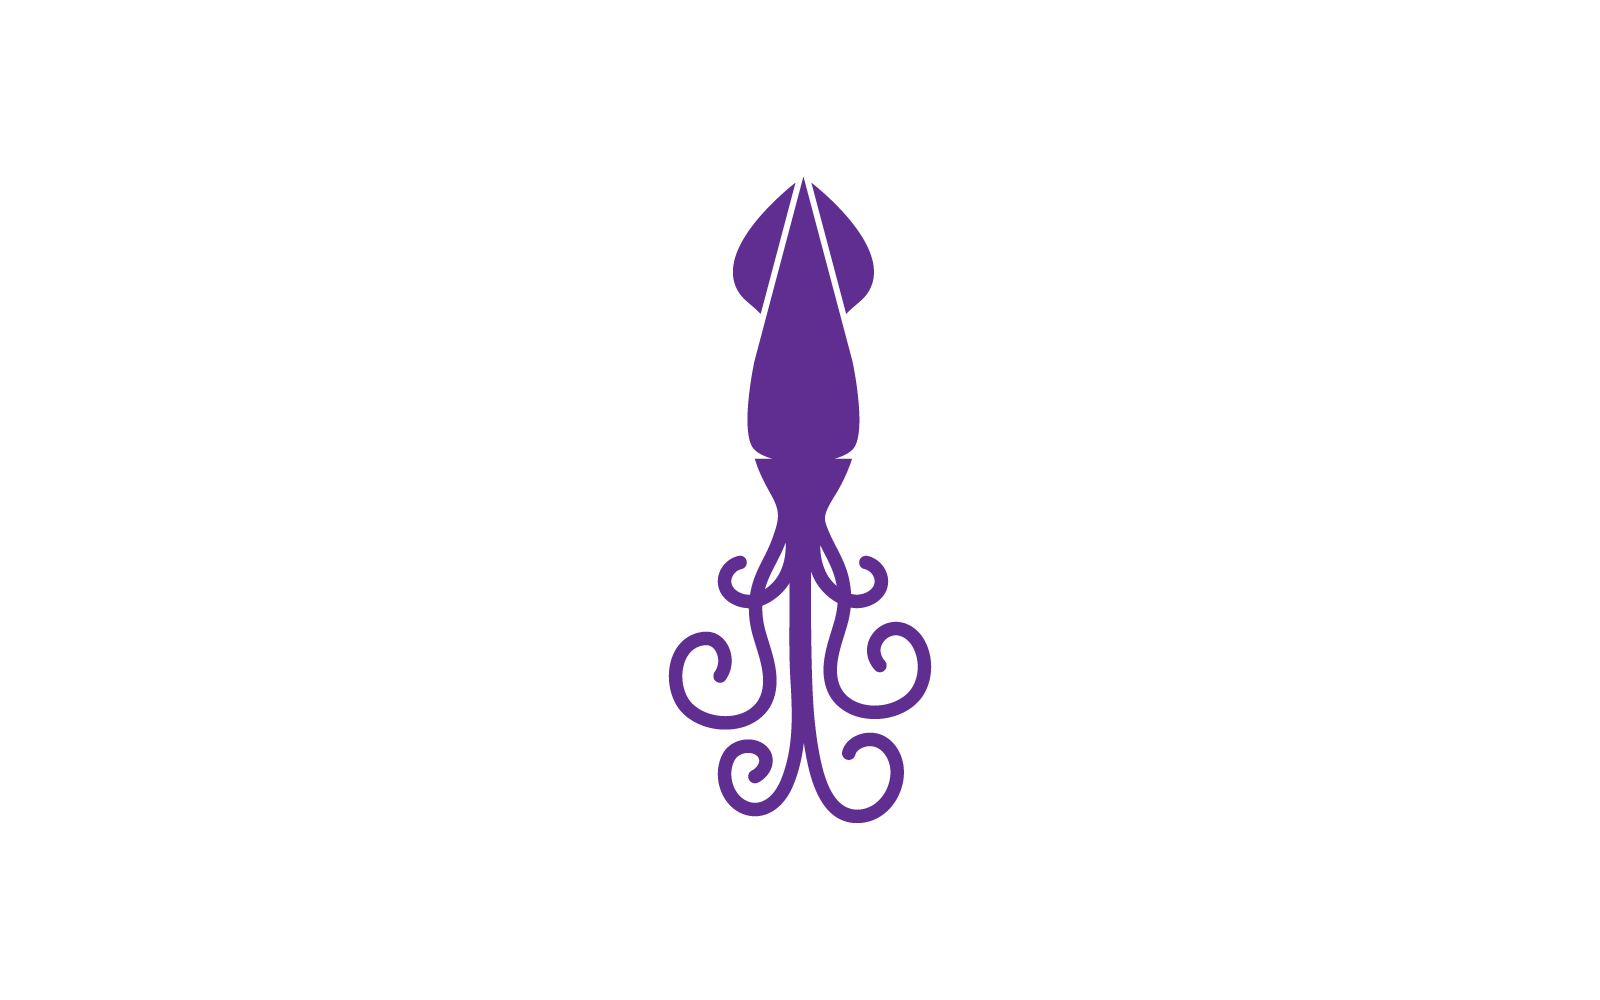 Squid fish illustration logo icon vector template